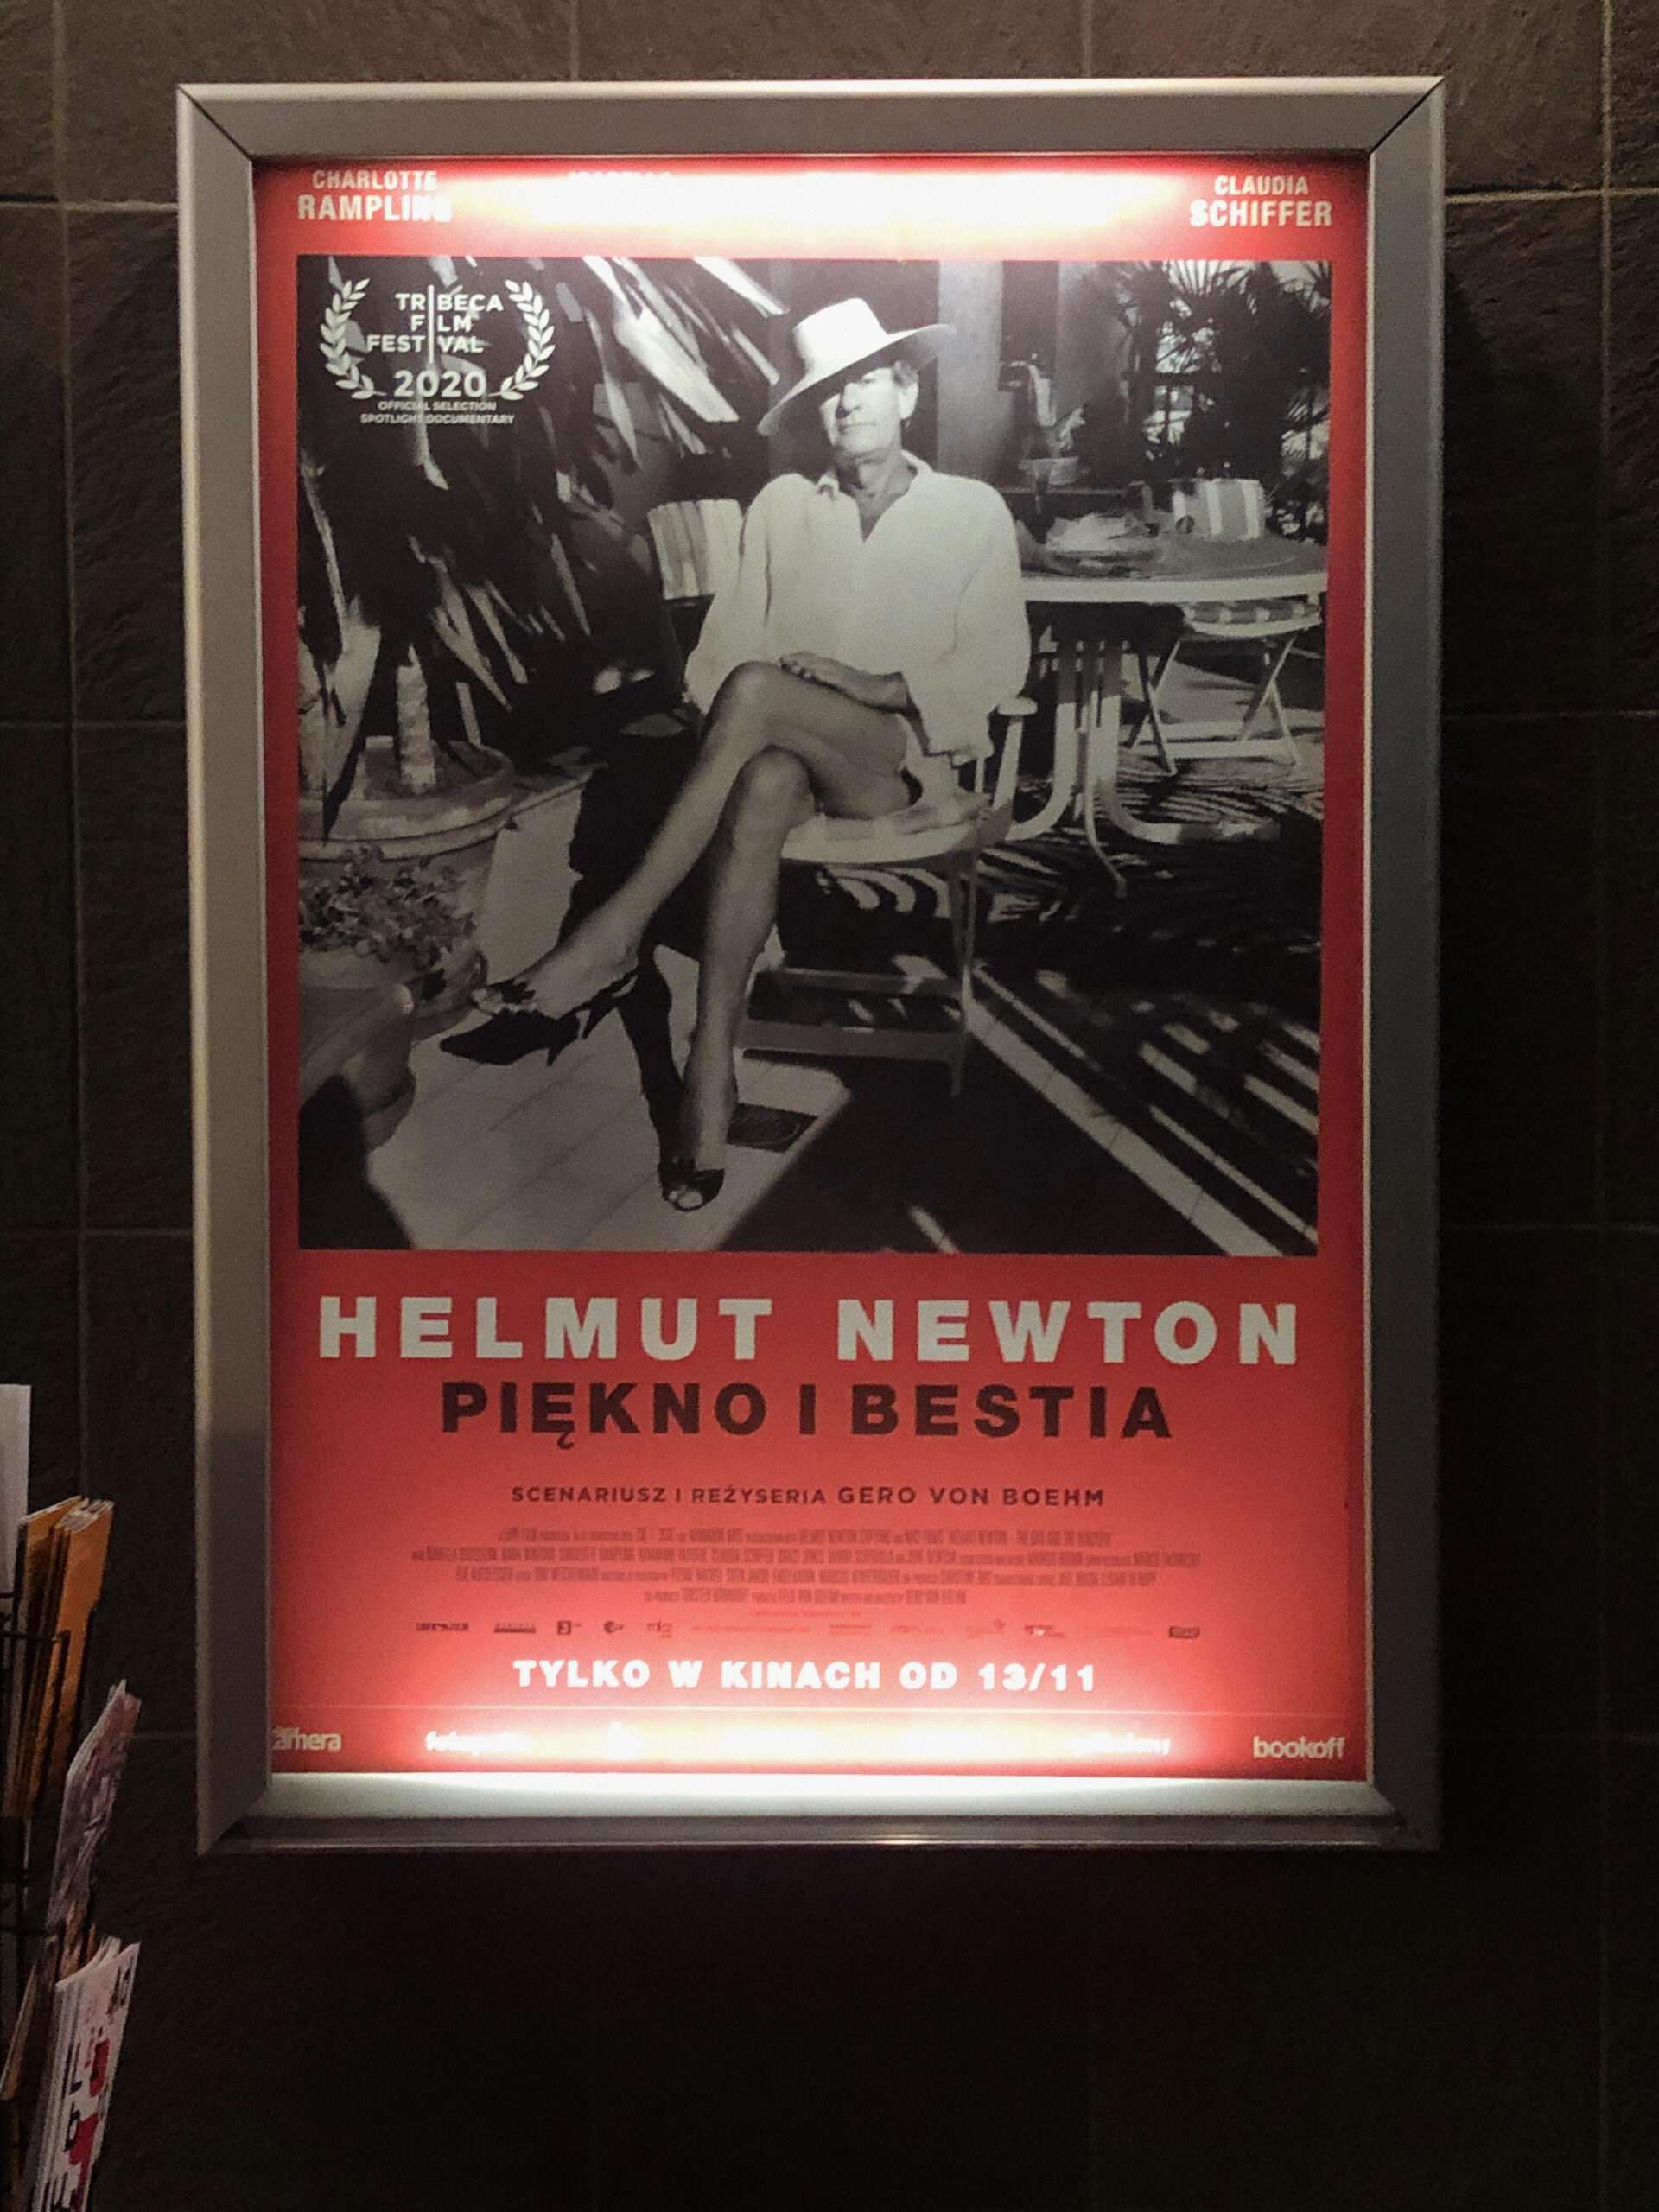 Helmut Newton Piękno i bestia